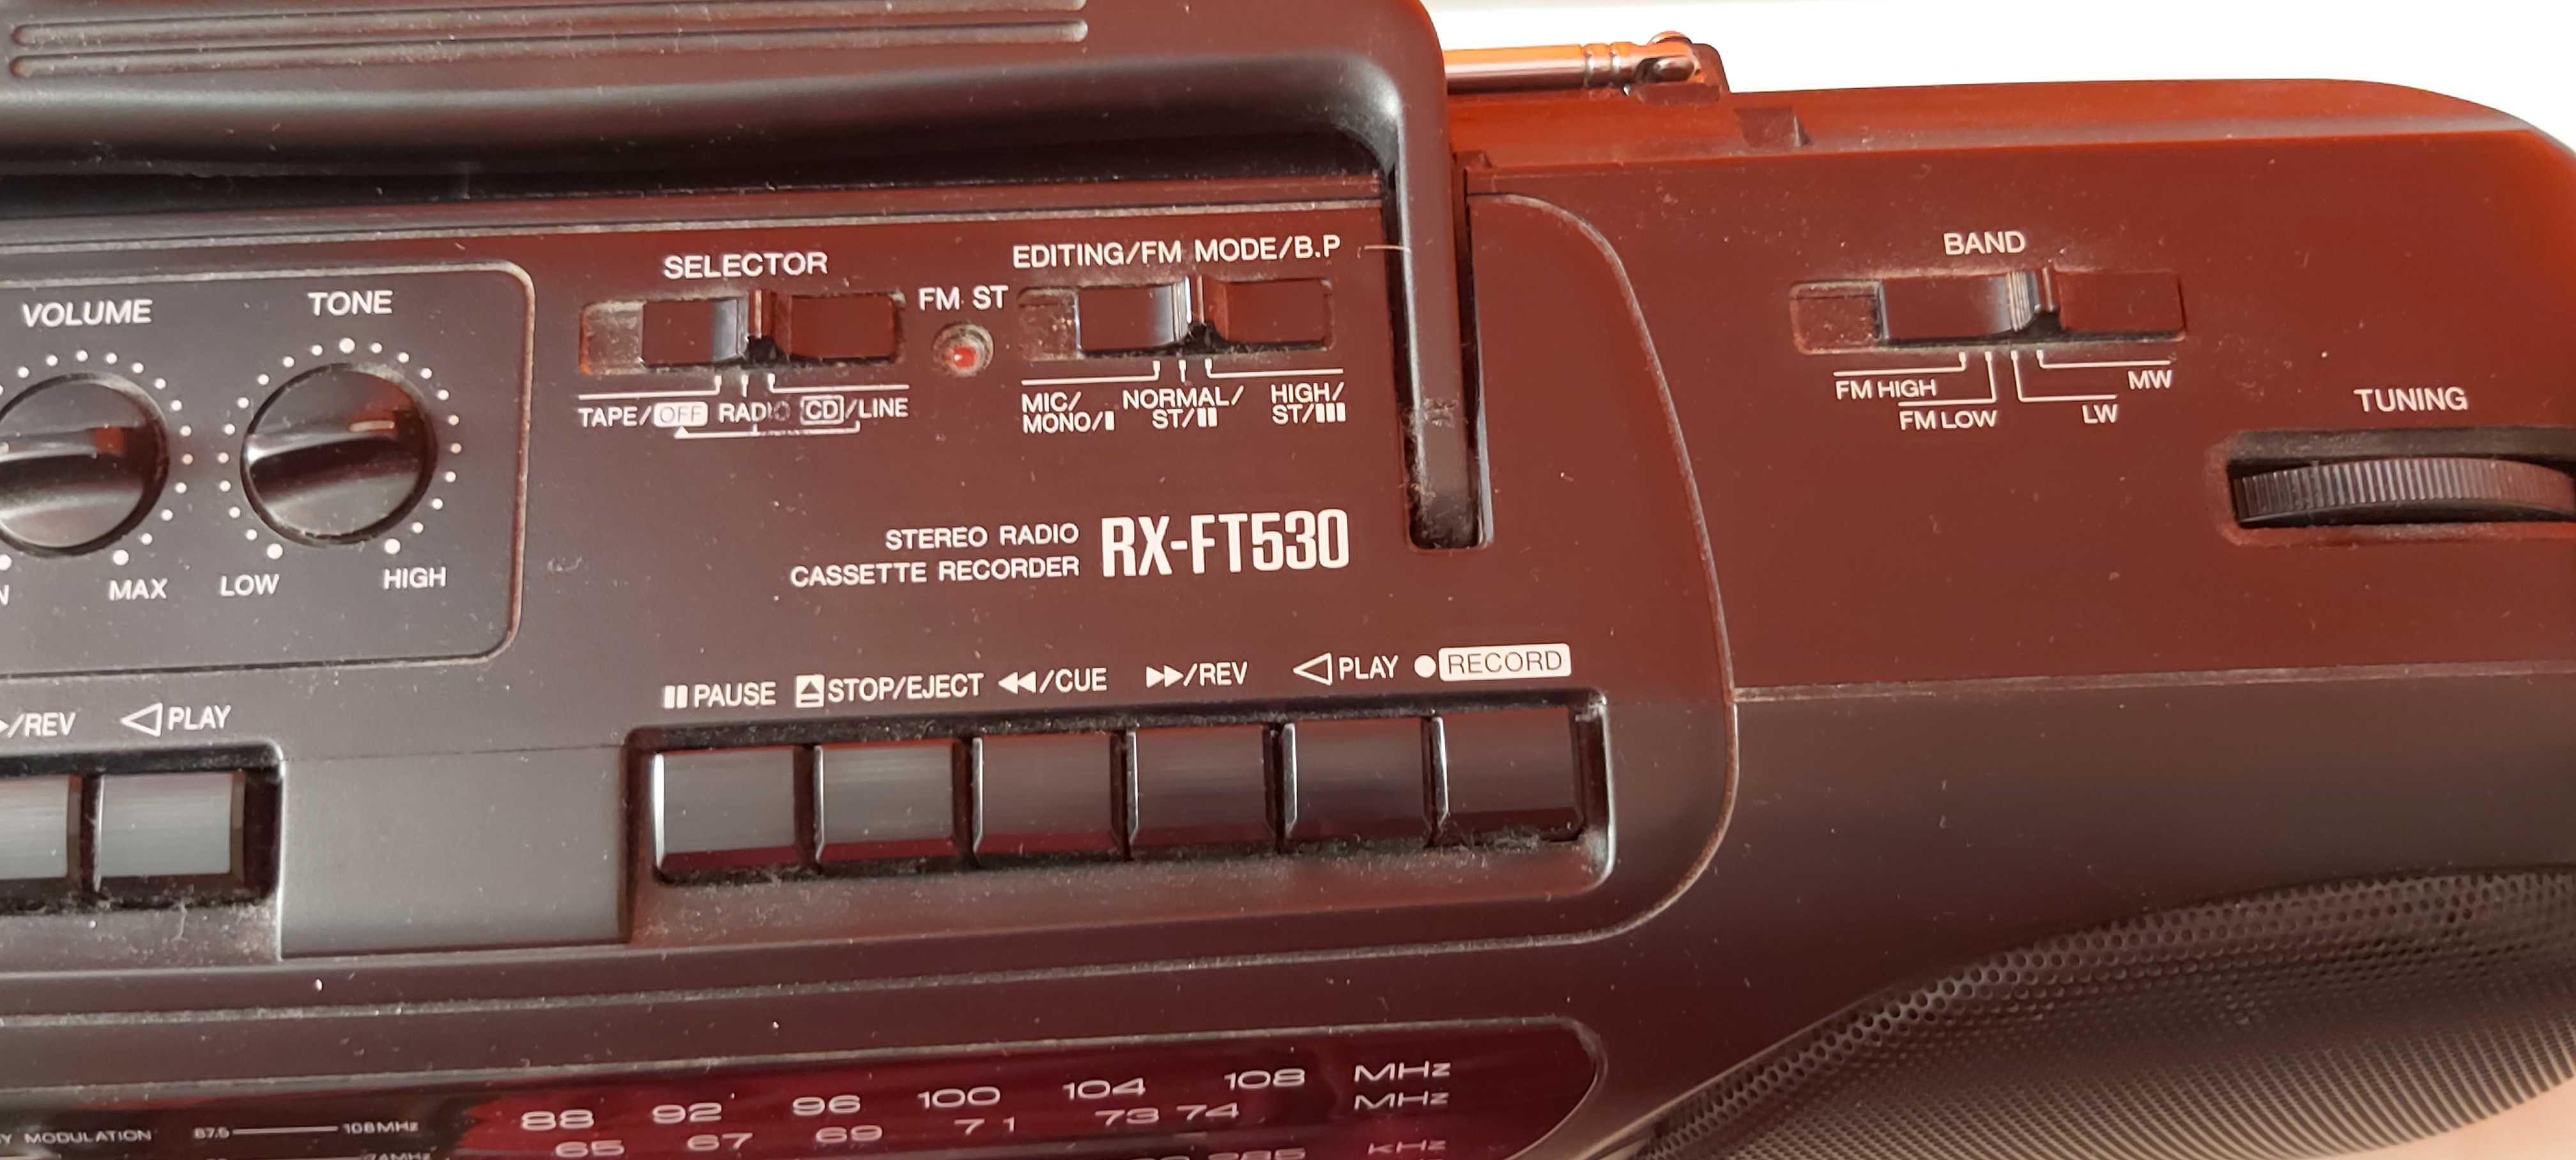 Radio magnetofon panasonic RX-FT530